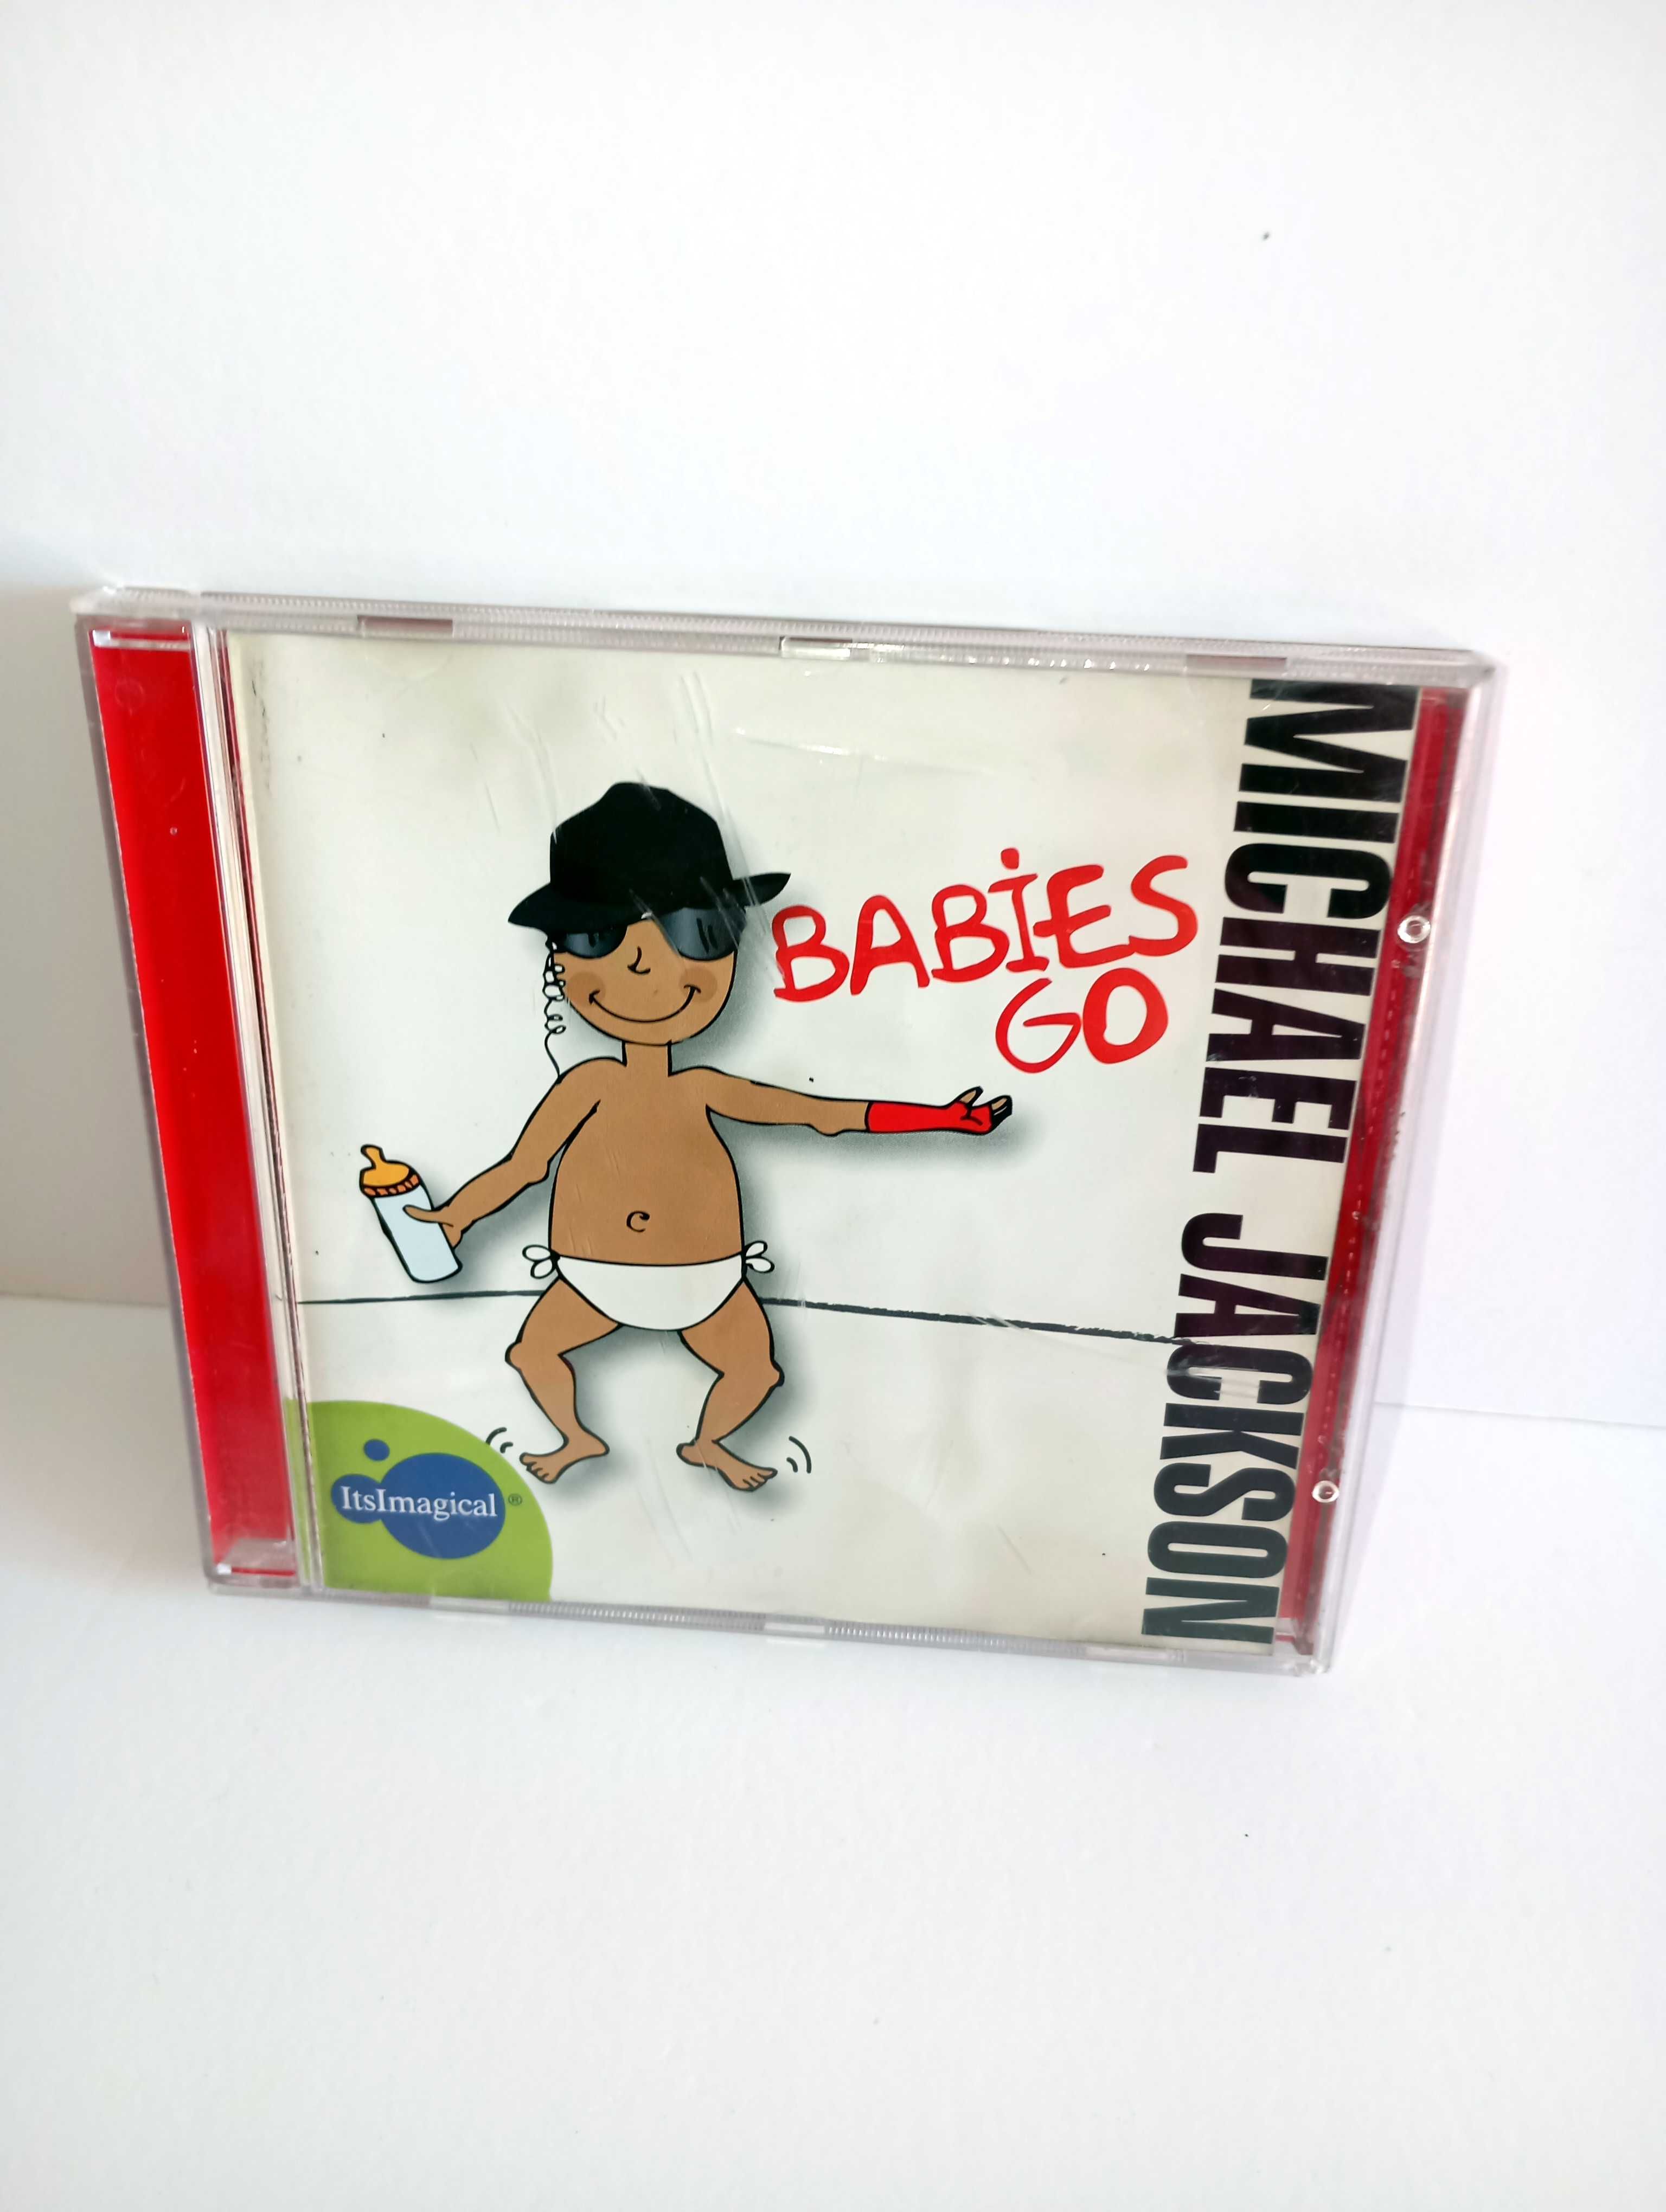 CD Babies Go... Michael Jackson - CD Original